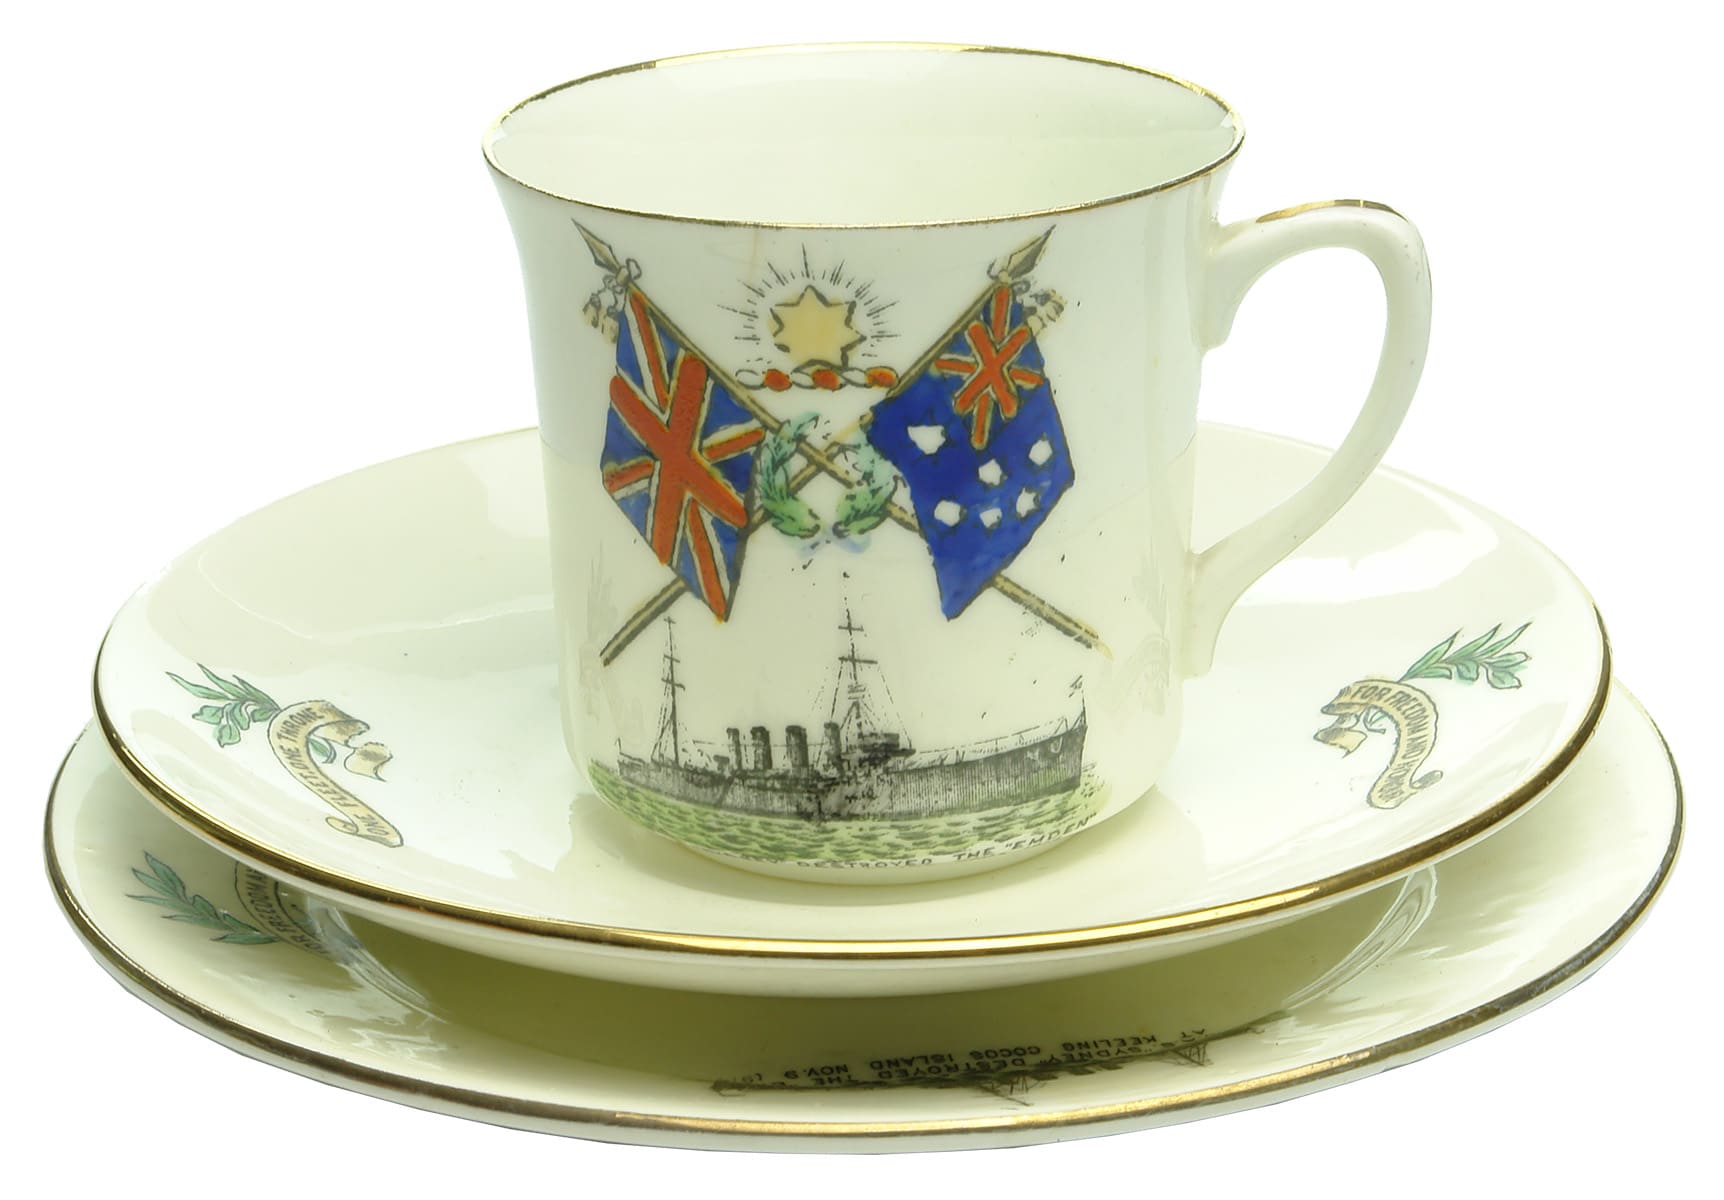 HMAS Sydney Emden Commemorative Porcelain